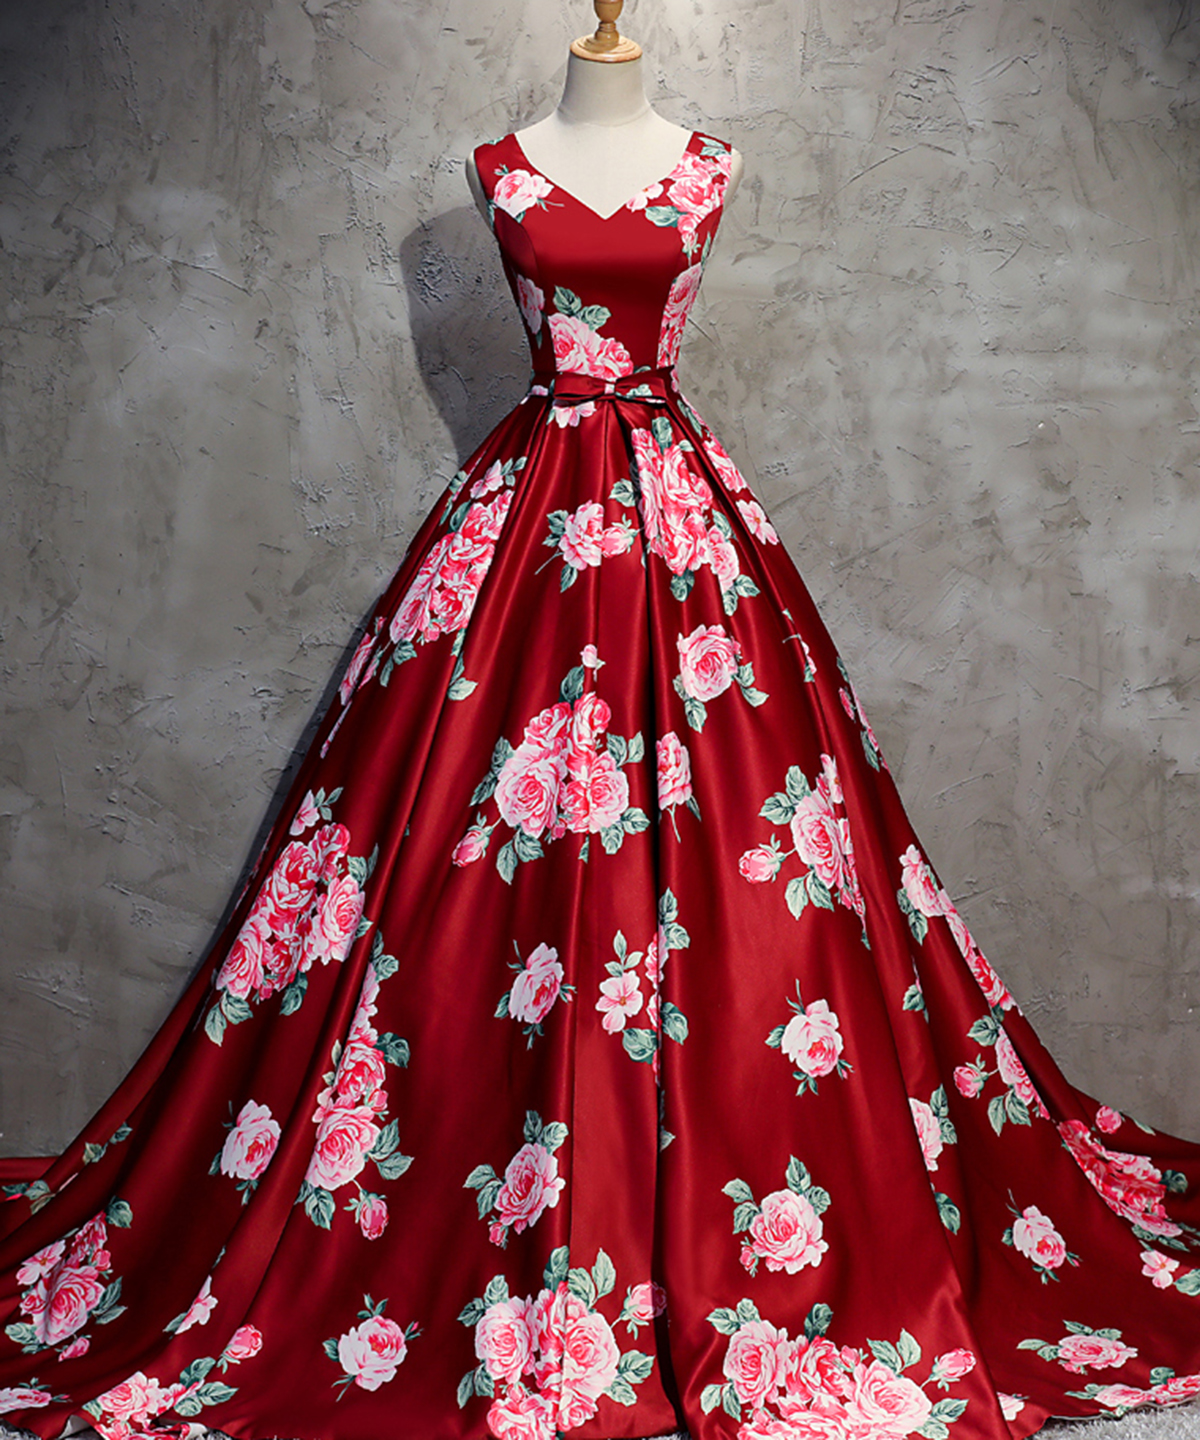 red satin floral dress